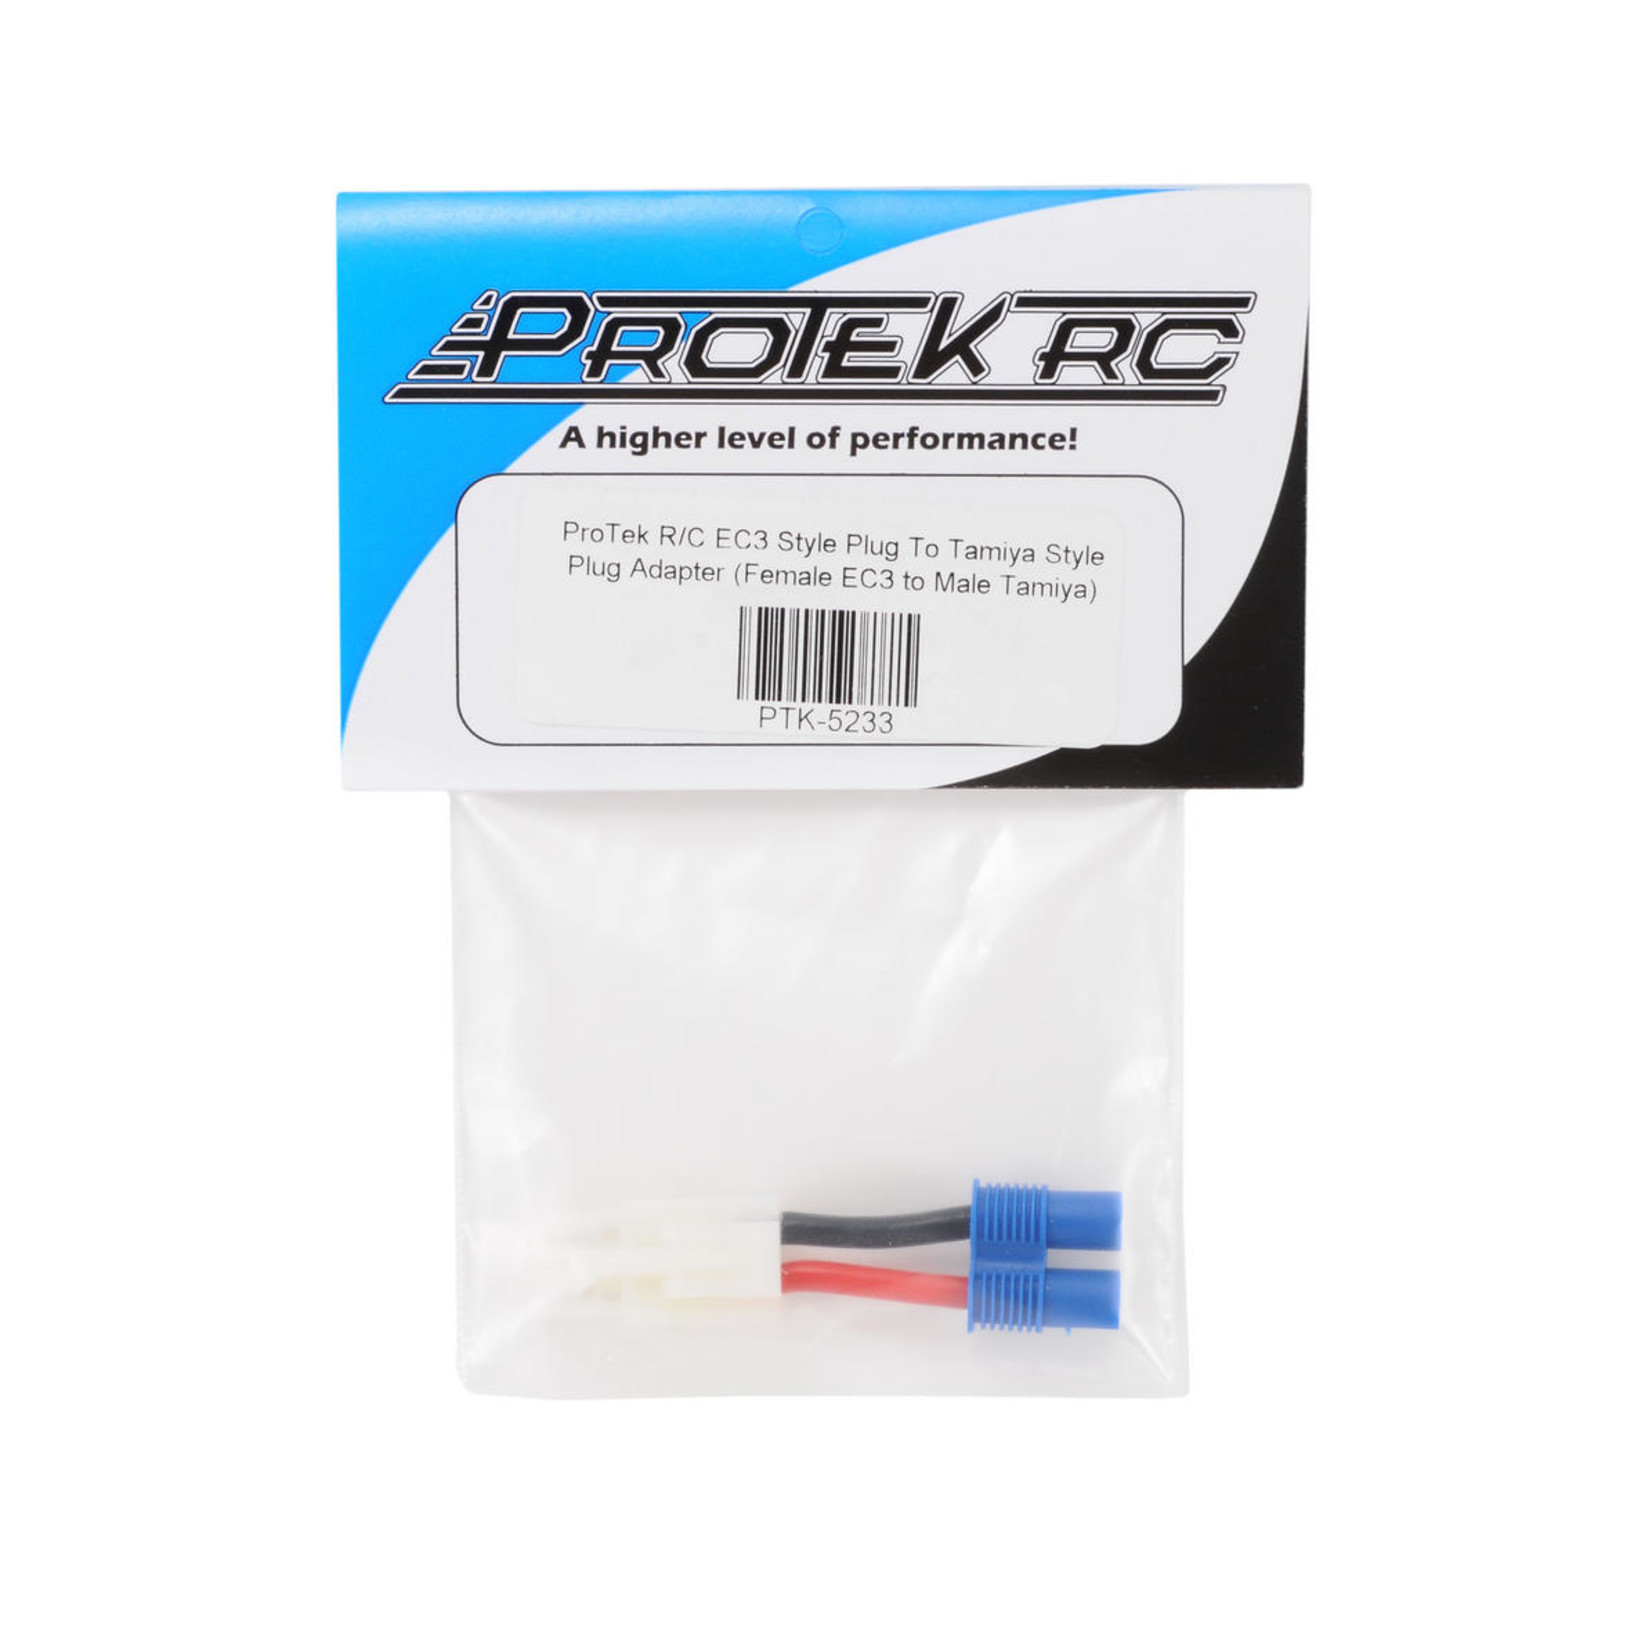 Protek R/C PTK-5233 EC3 Style Plug to Tamiya Style Plug Adapter